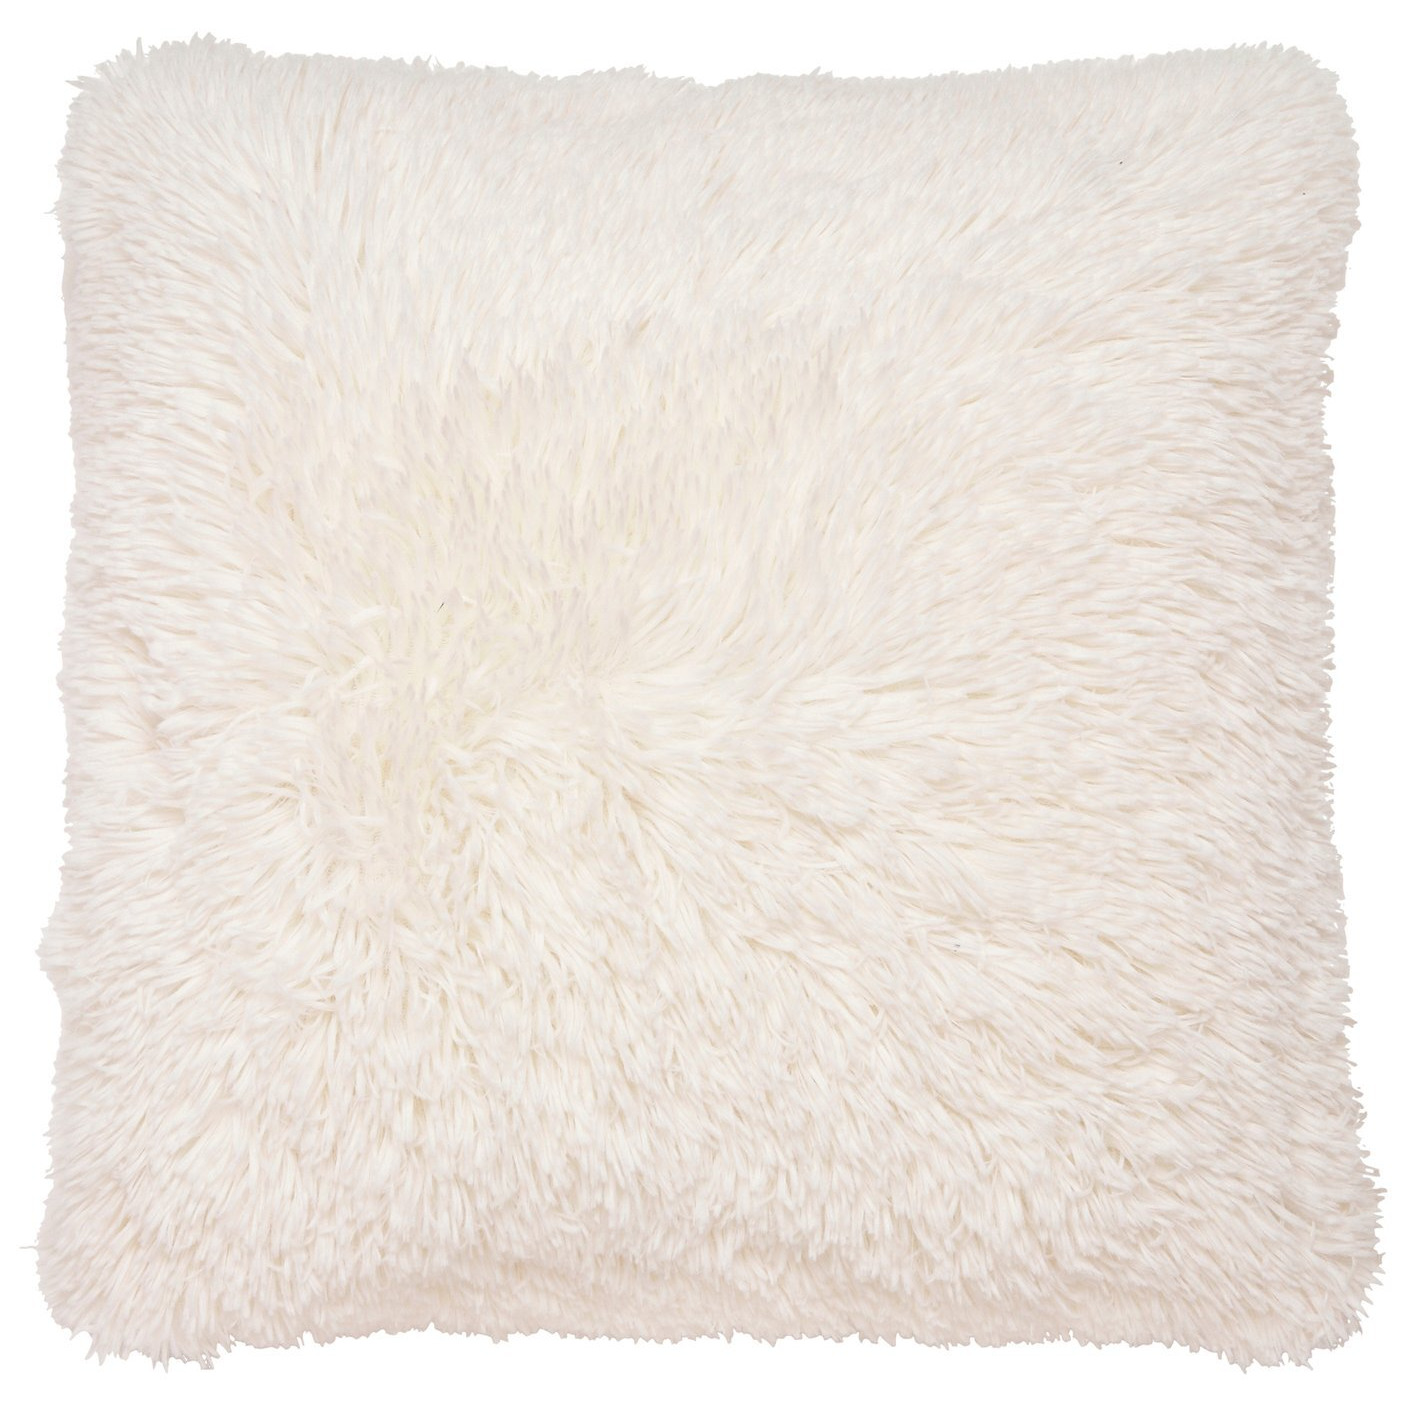 Catherine Lansfield Cuddly Cushion - Cream - 45x45cm - image 1